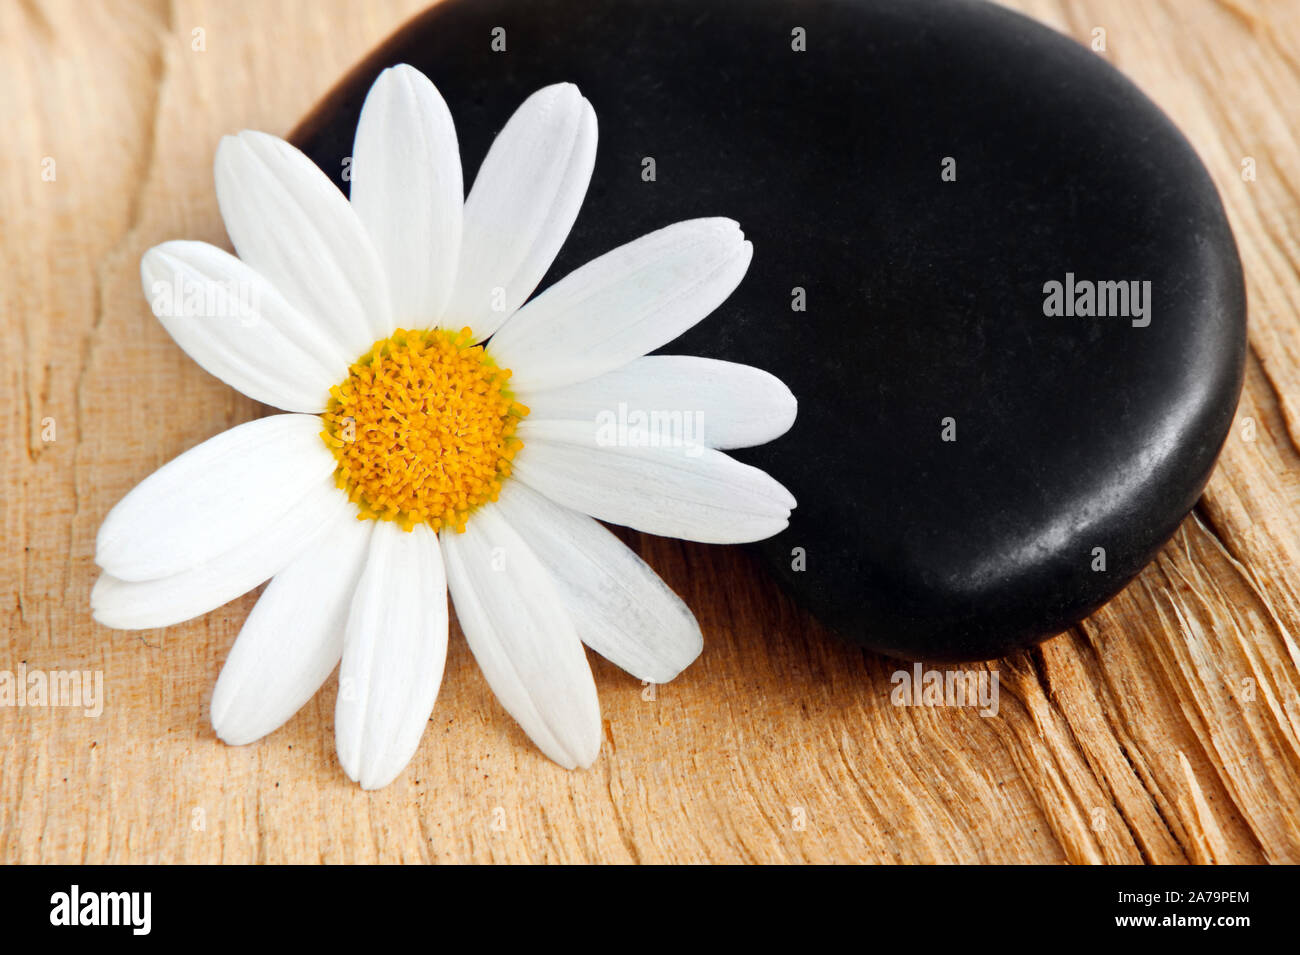 Wellness - stone and flowers Stock Photo